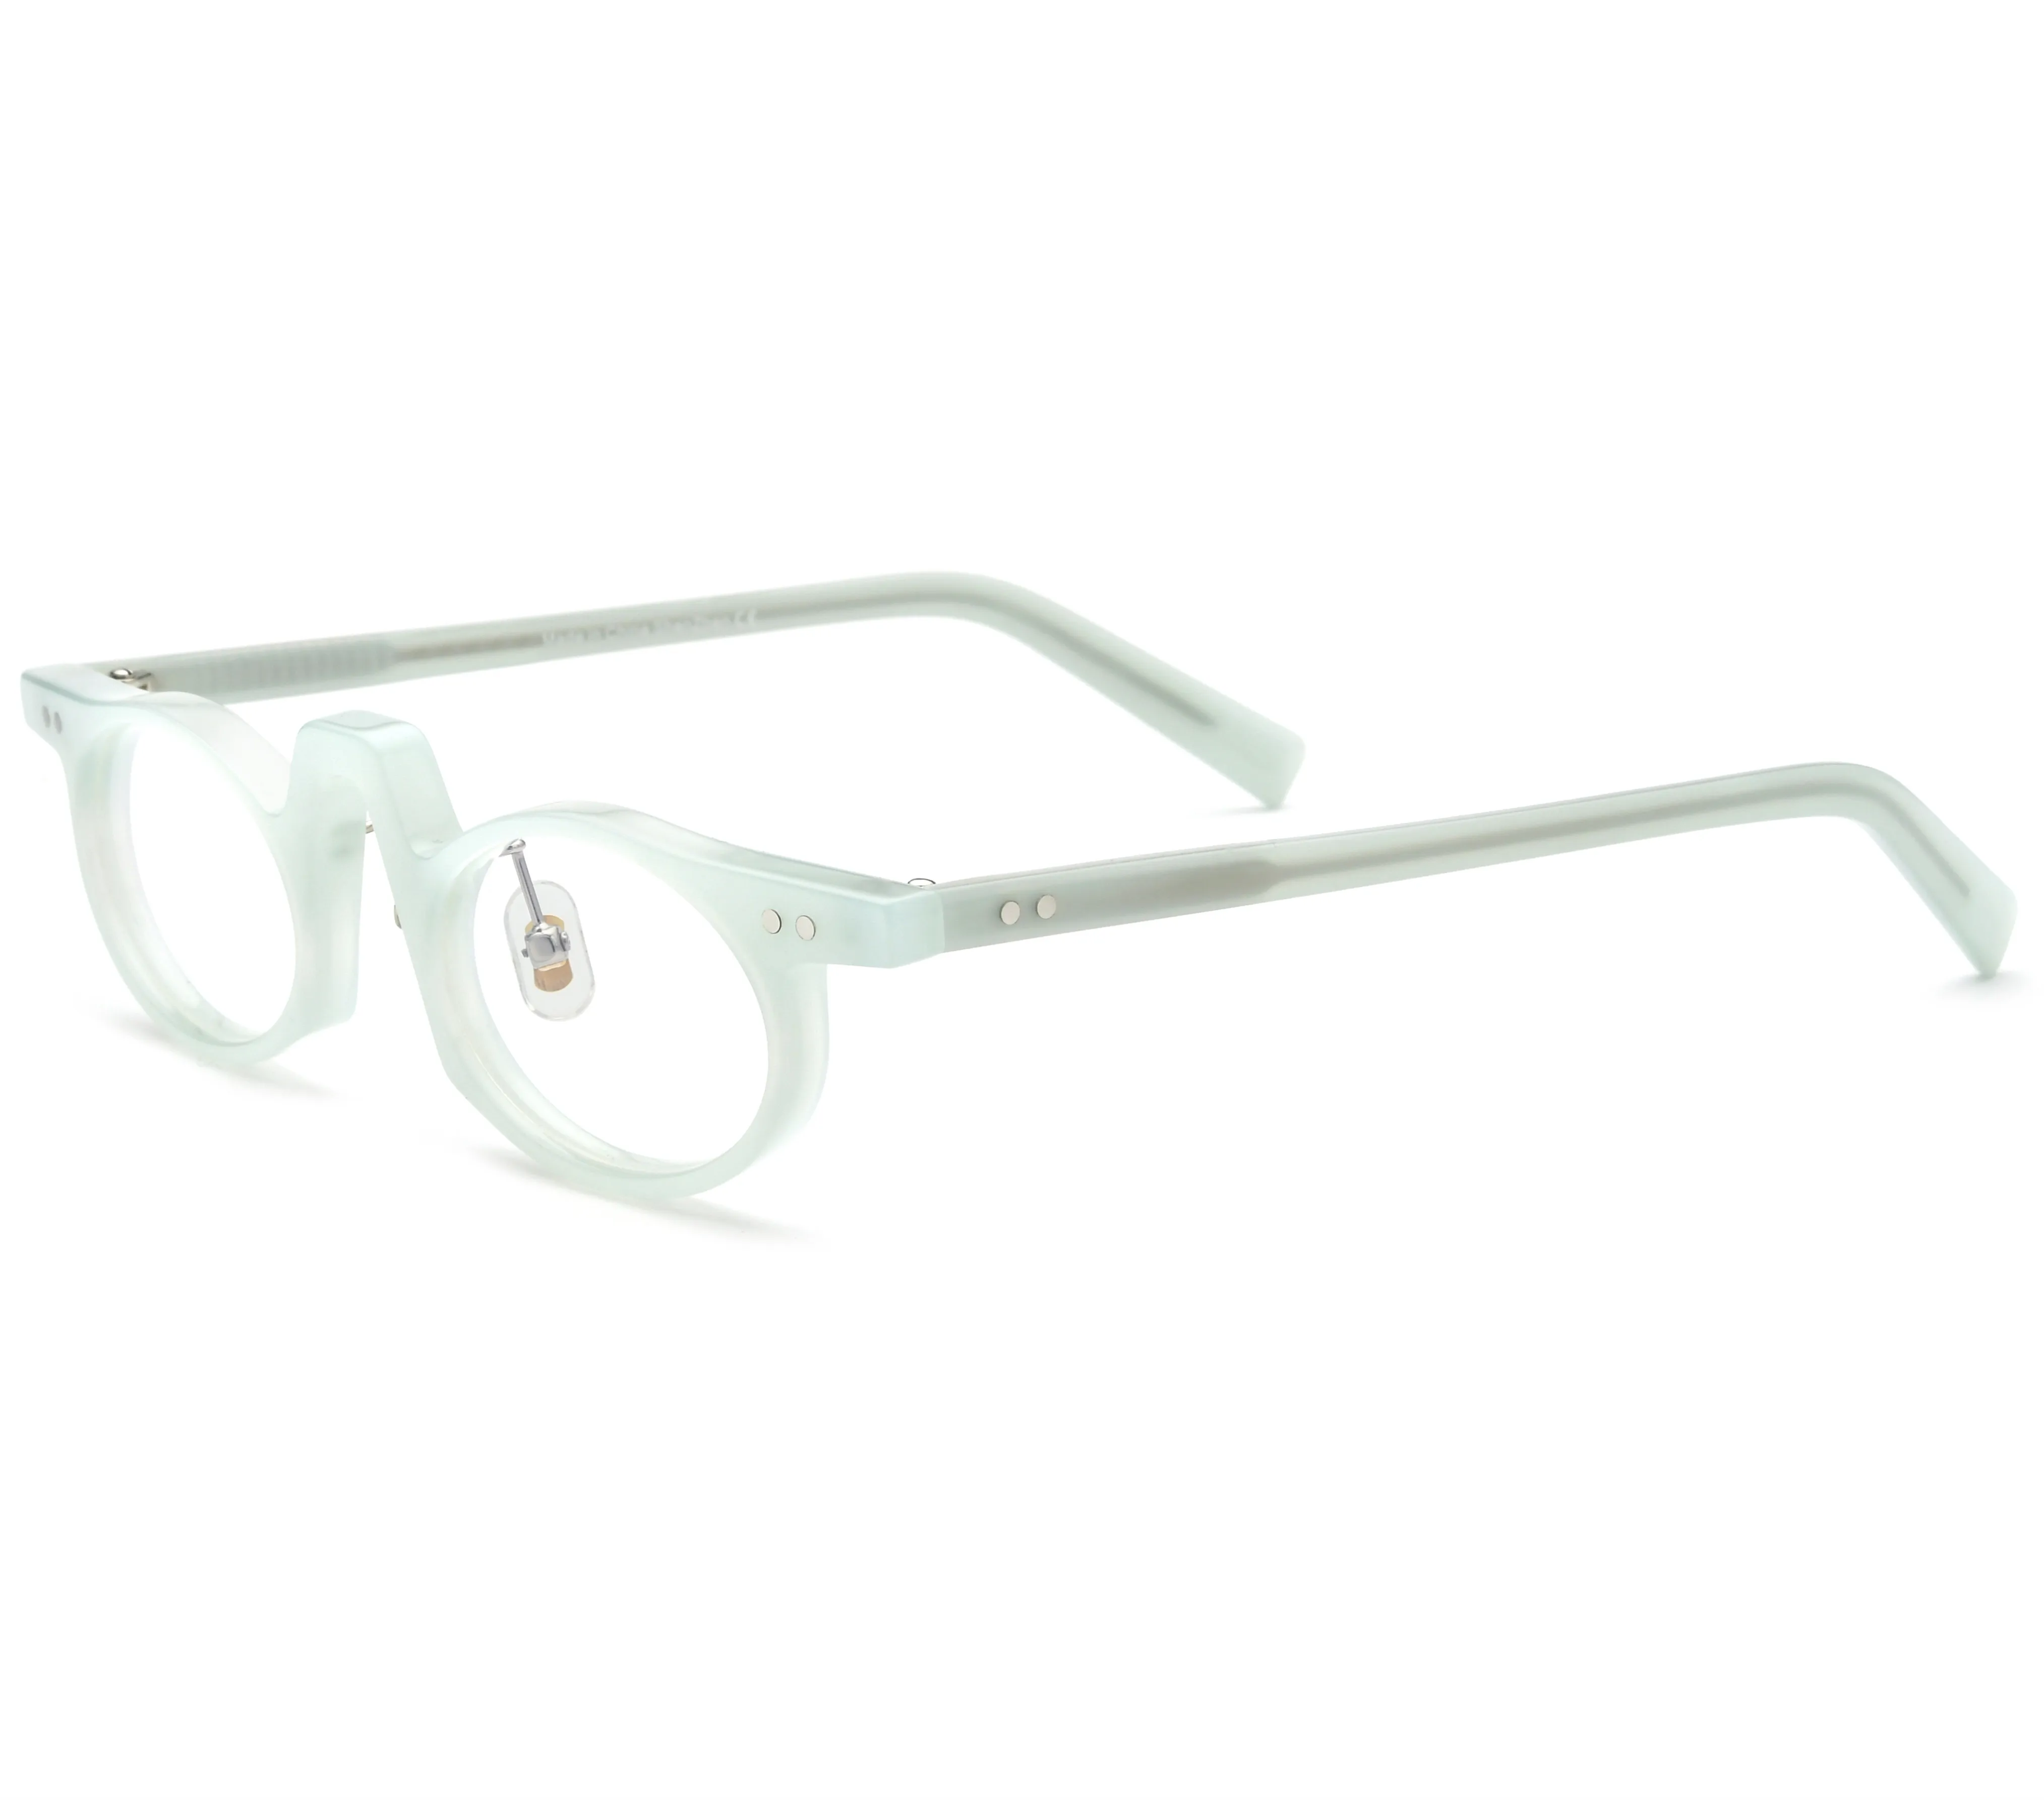 Shiny tortoiseshell color stitched glasses frame